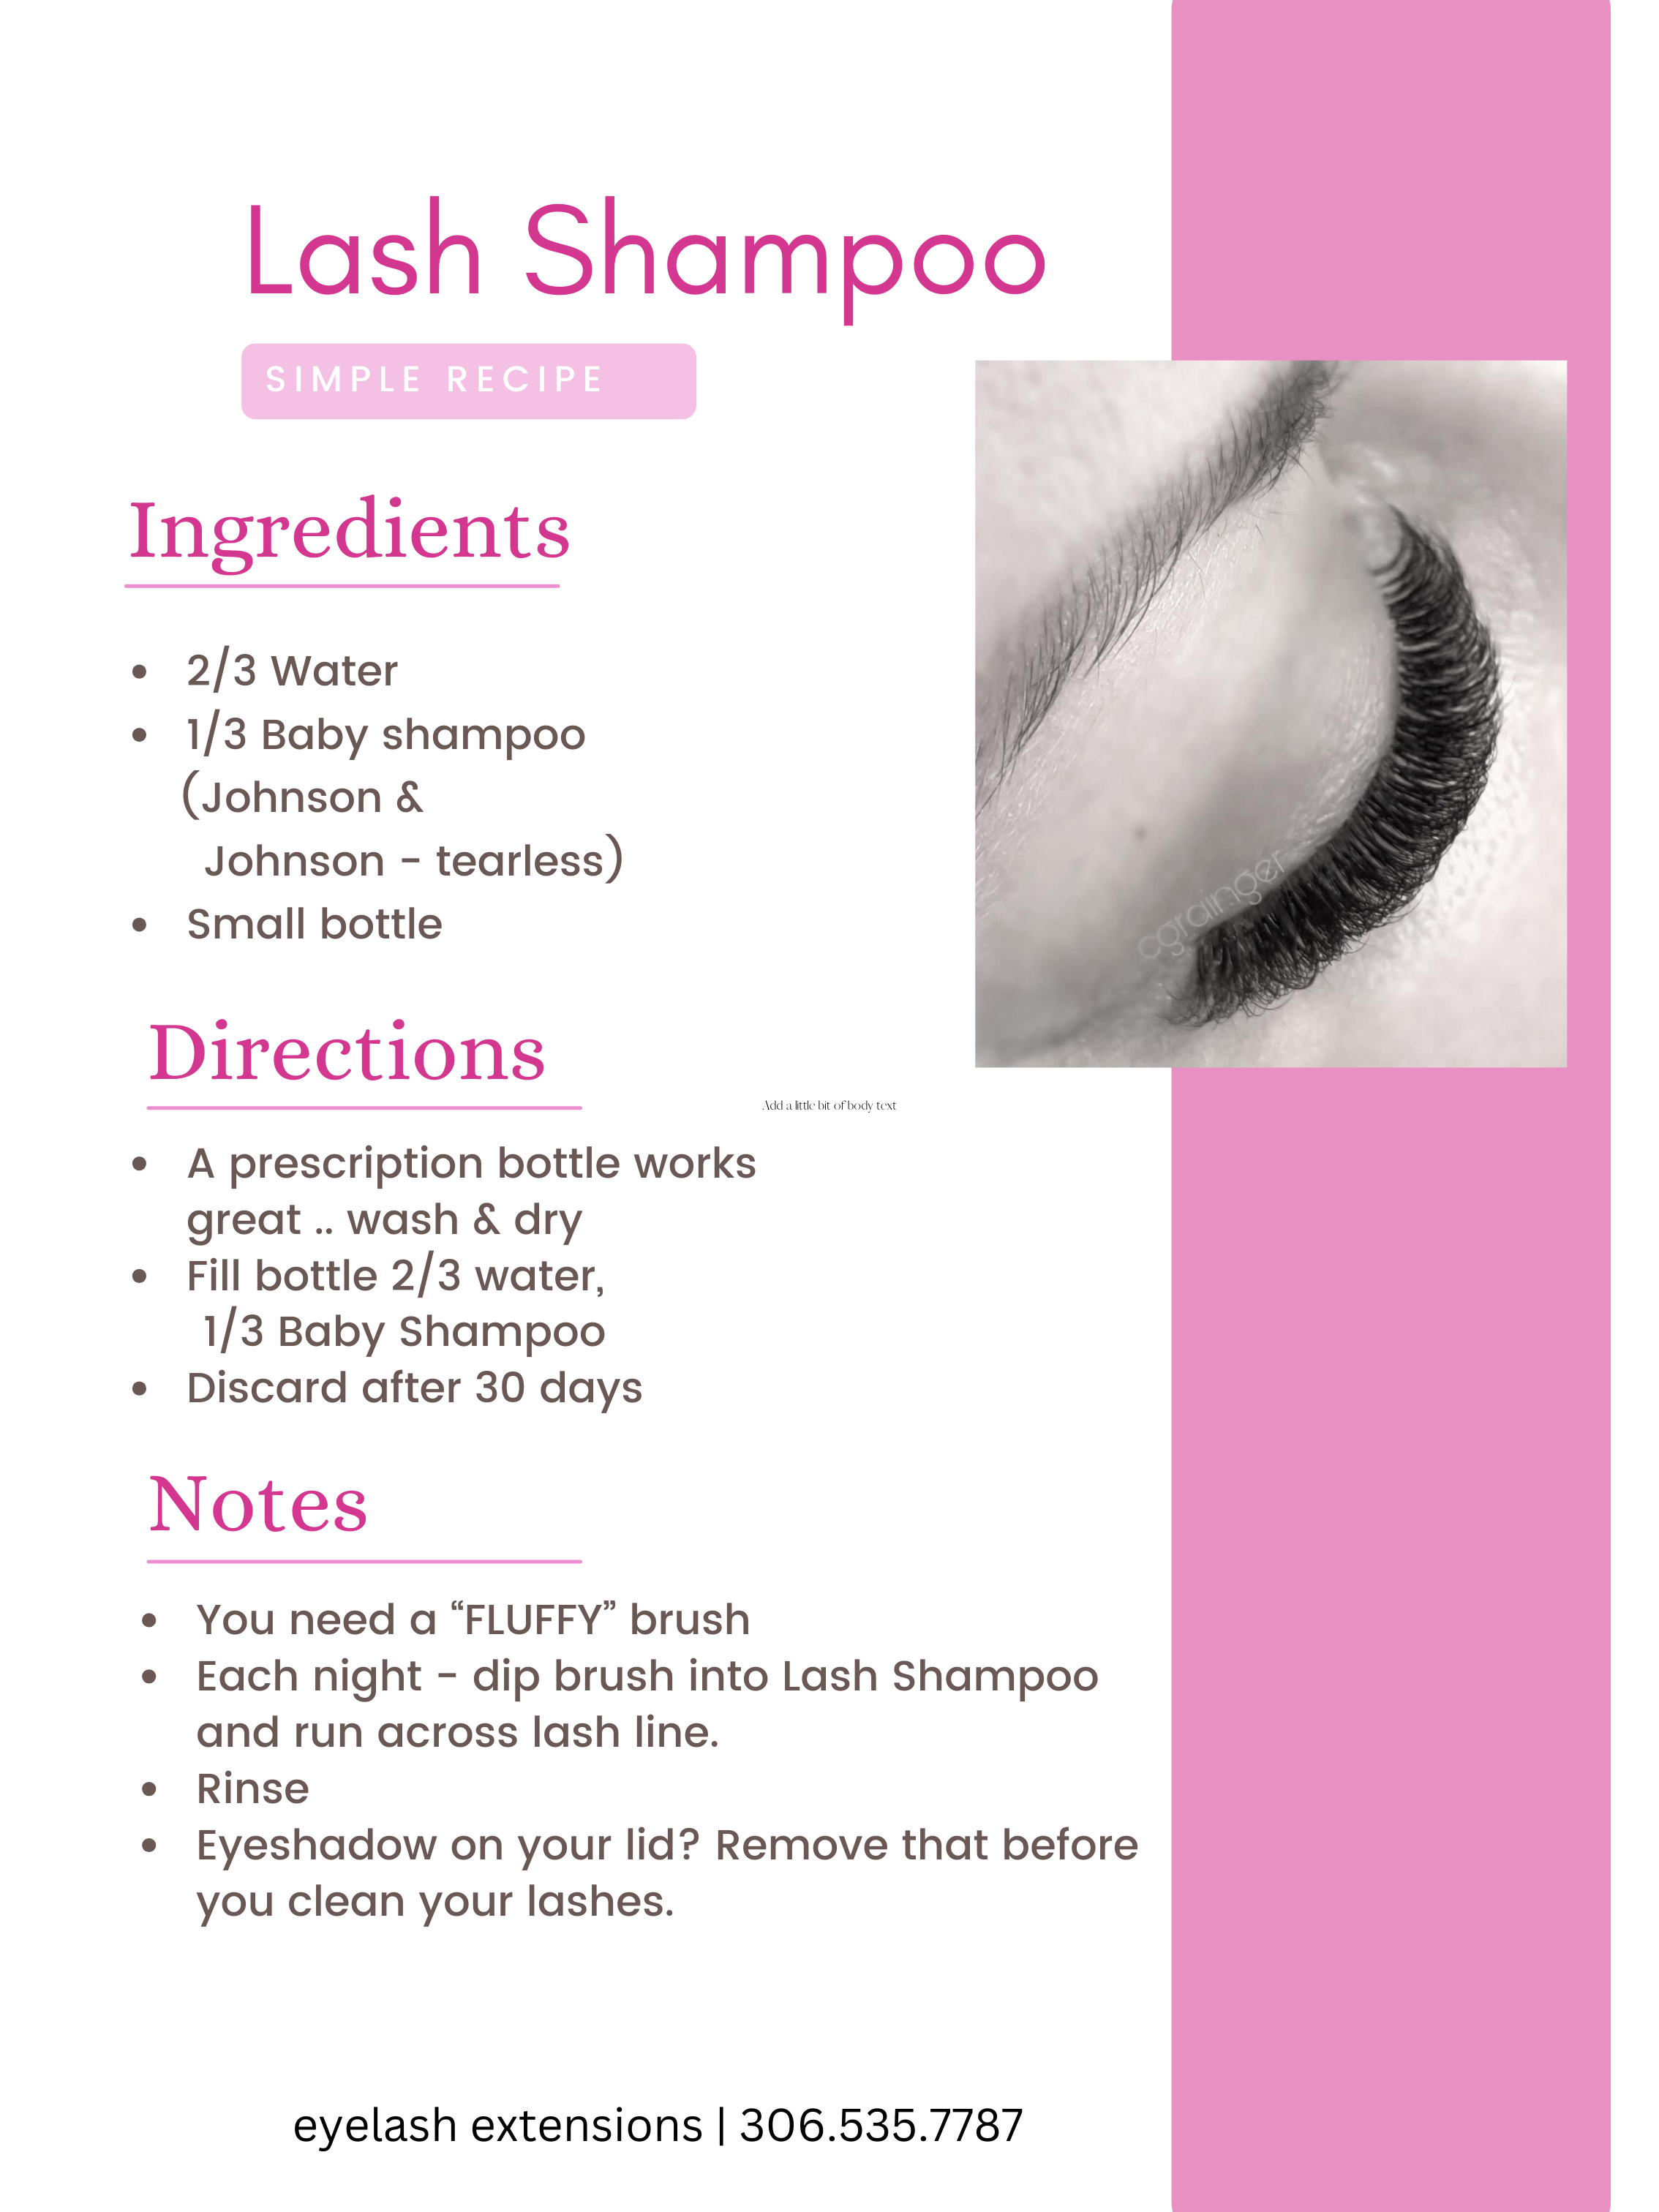 Lash Shampoo Recipe for Lash Extensions or Natural Lashes - cg lash studio, regina sk